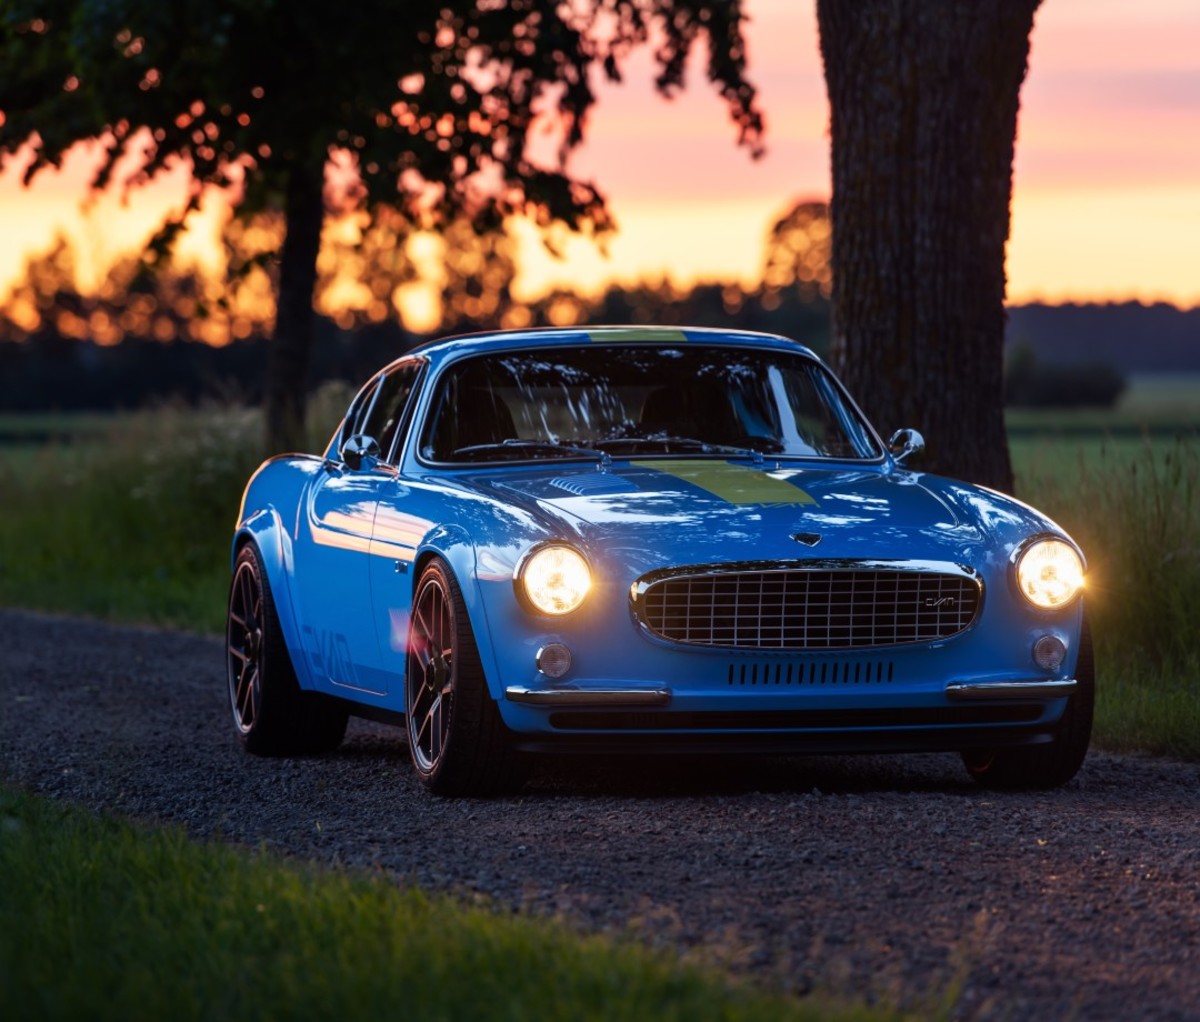 Blue restomod sports car parked outside at sunset